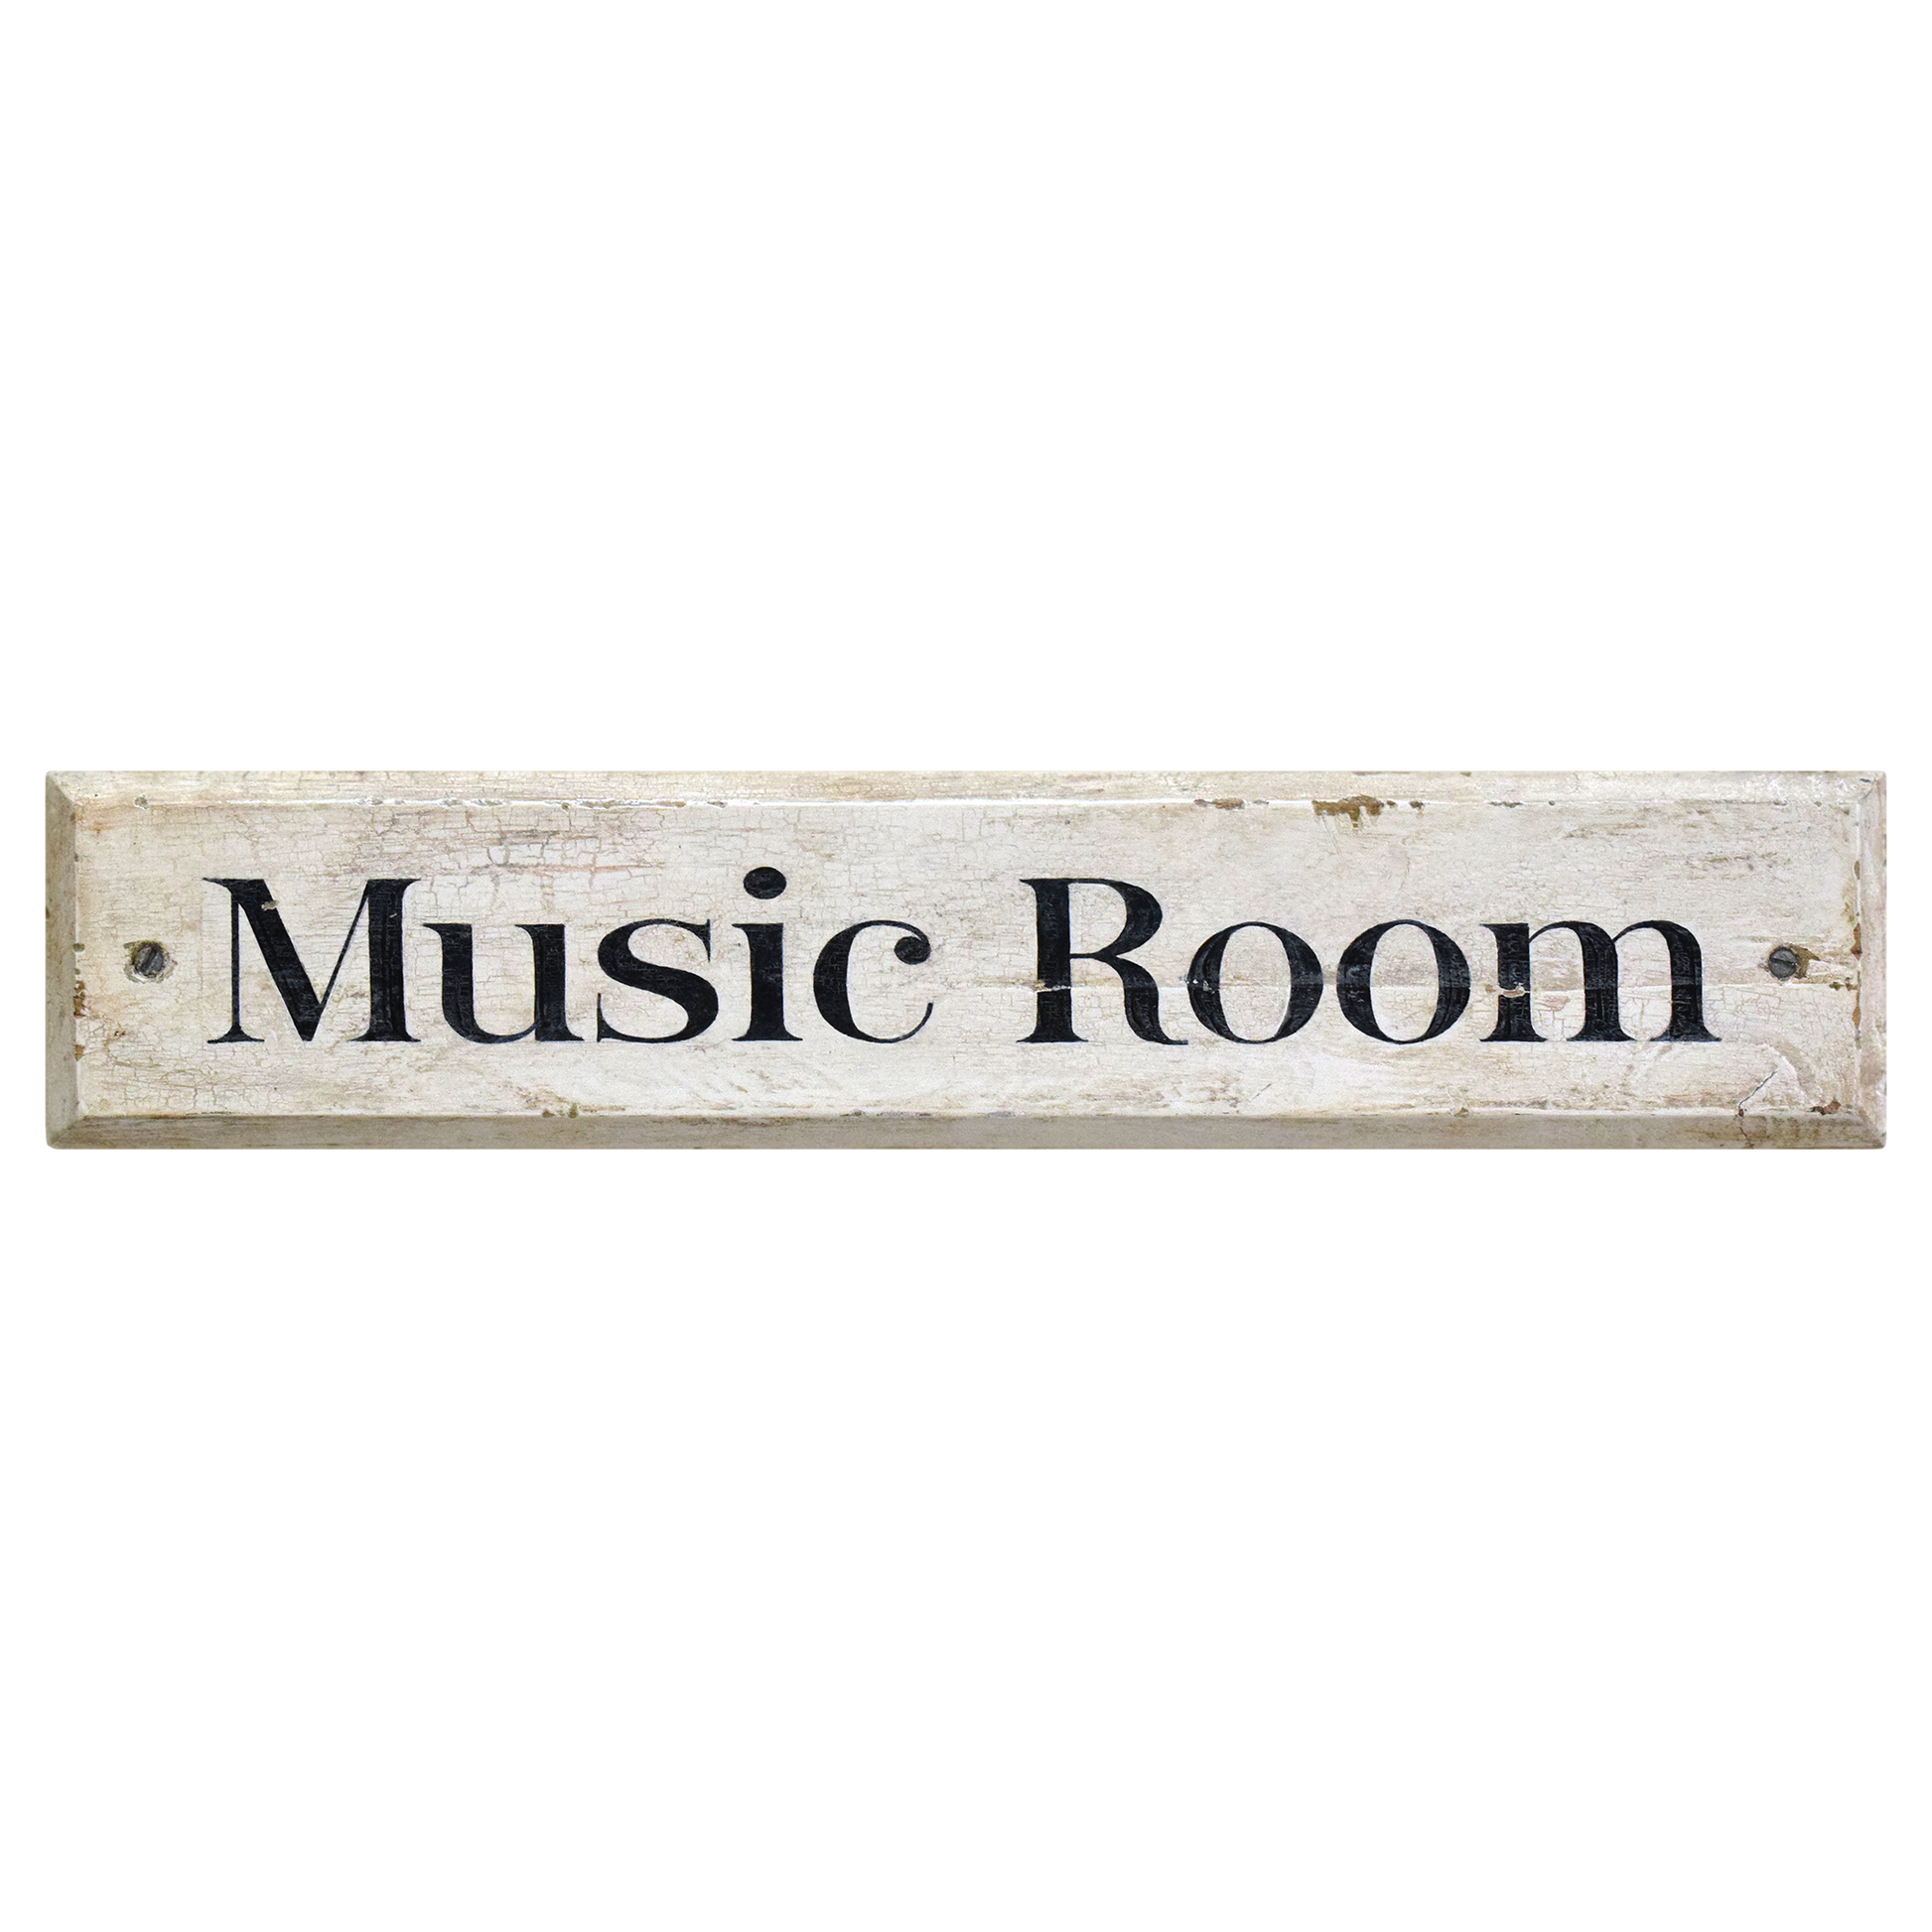 Black & White Vintage Wooden Door Sign: Music Room